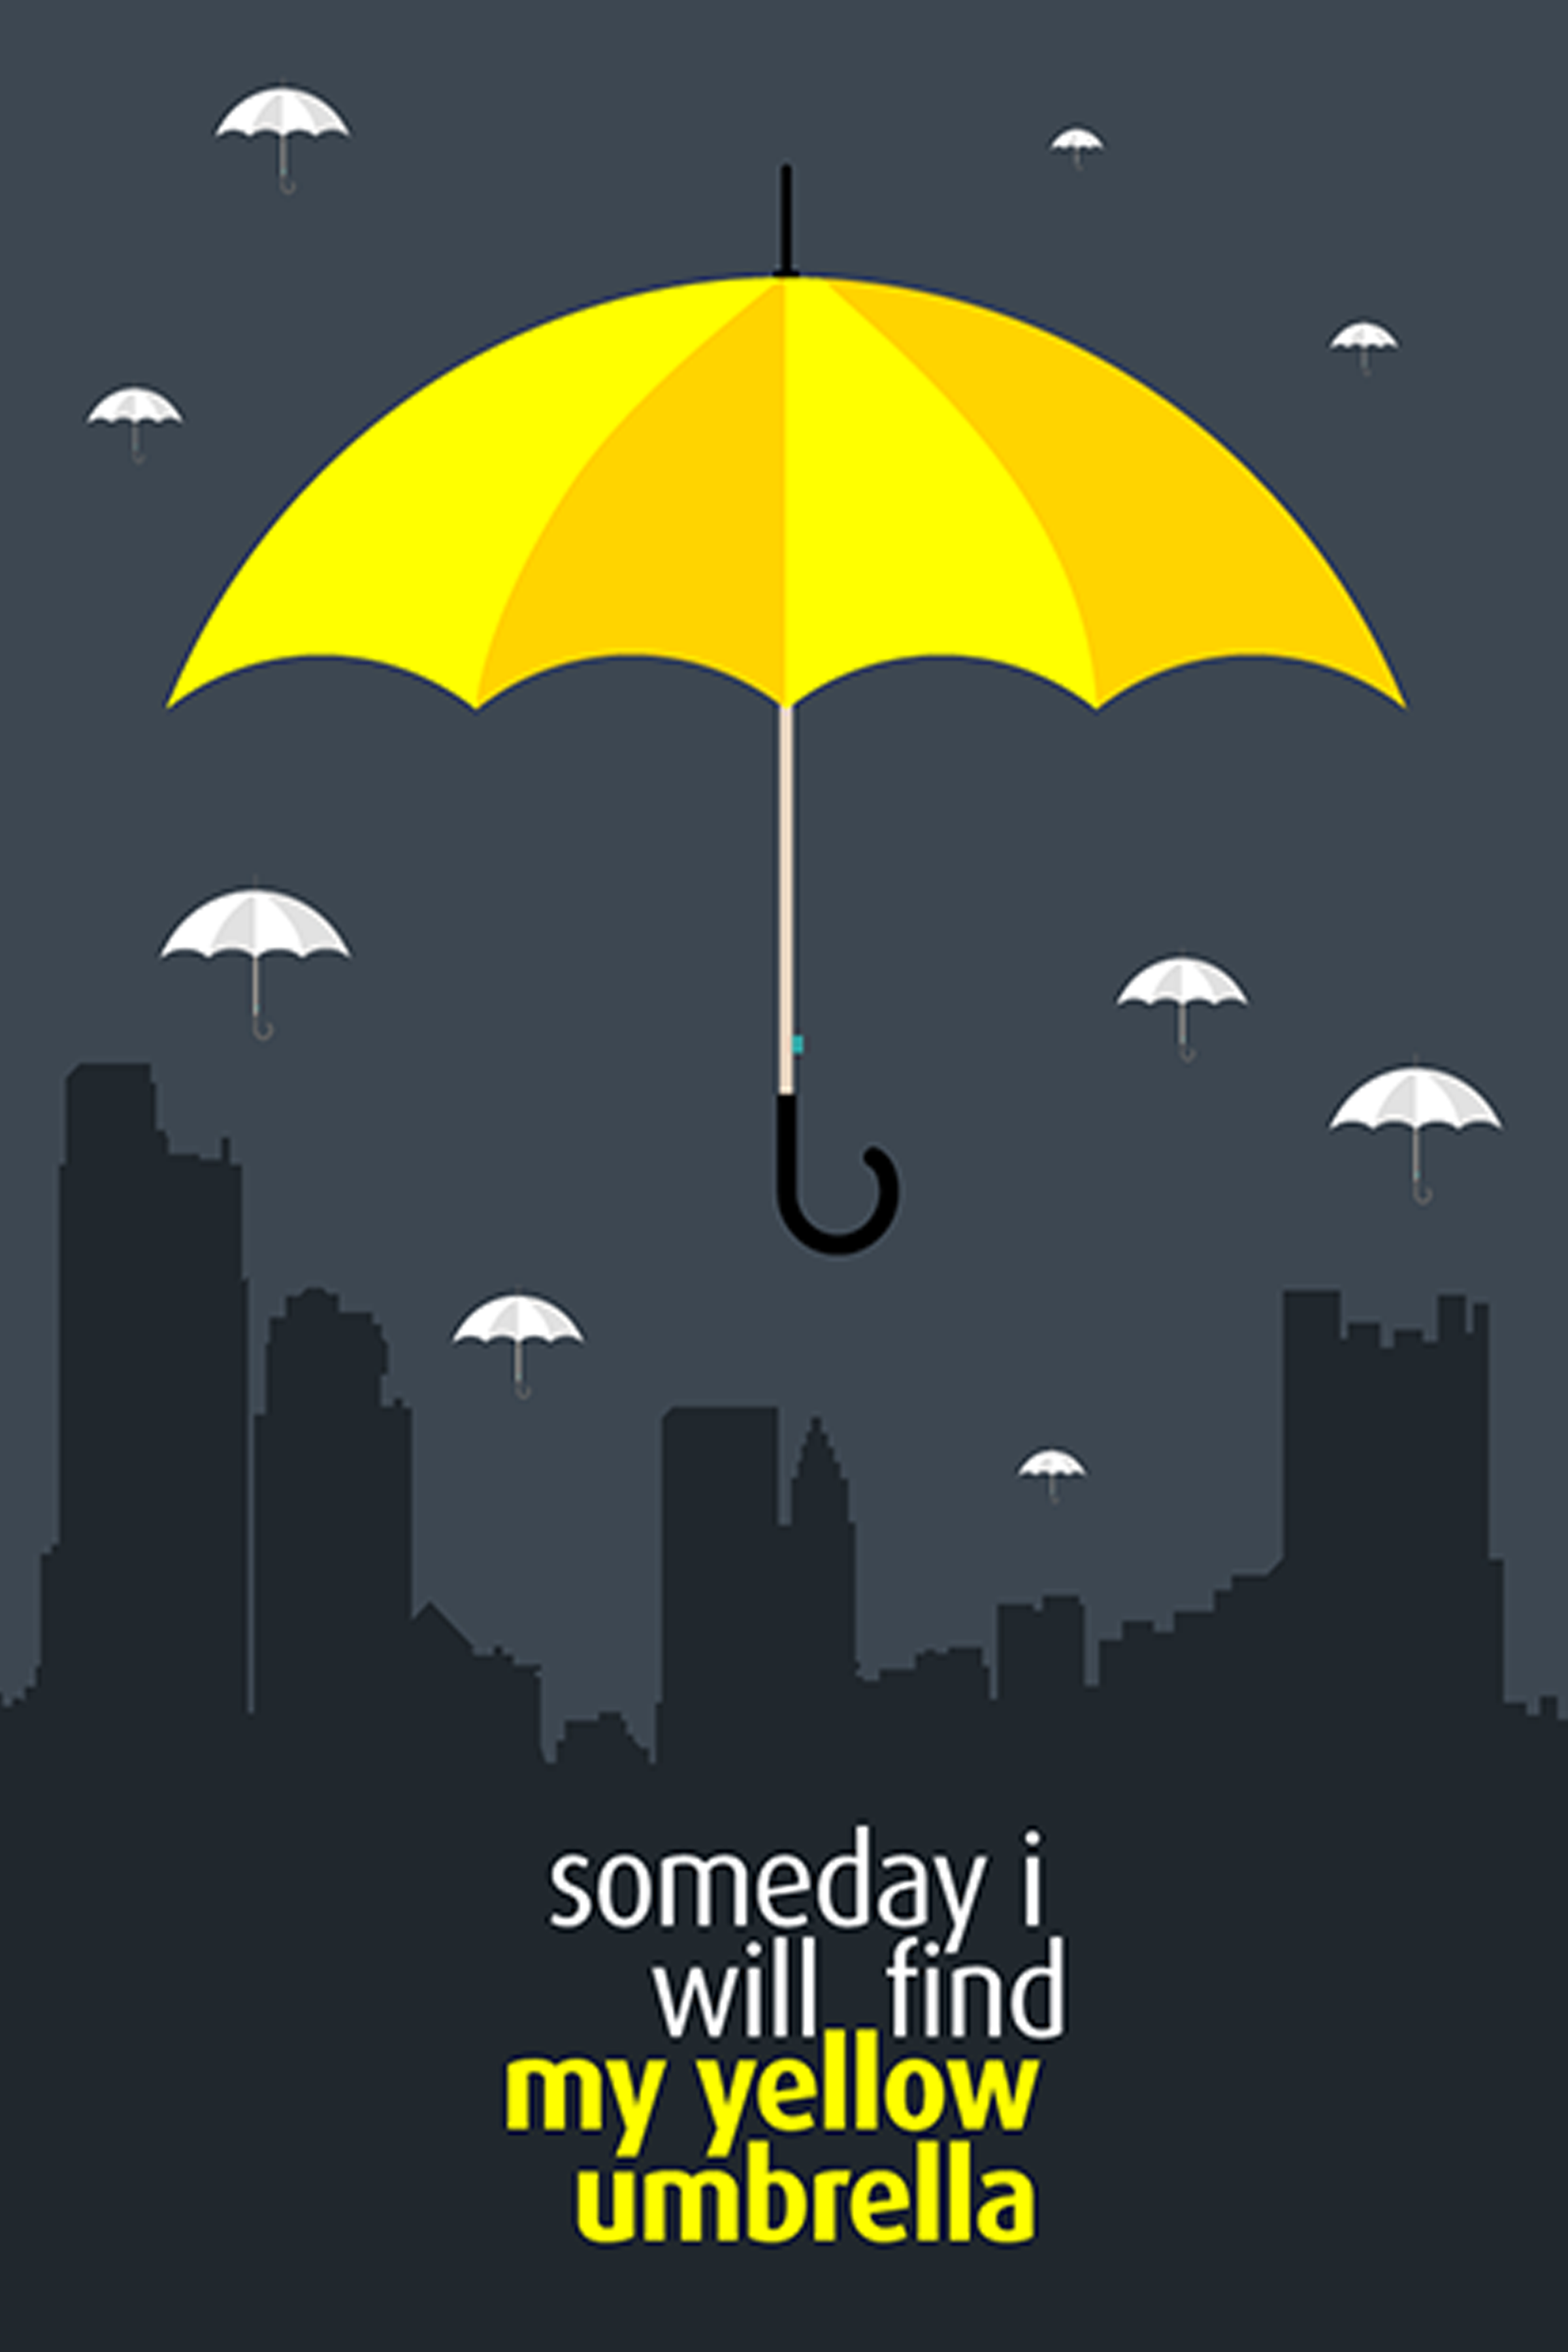 You take an umbrella today. Постер зонтики. Зонтики плакат. Желтый зонт как я встретил Вашу маму. Желтый зонт КЯВВМ.